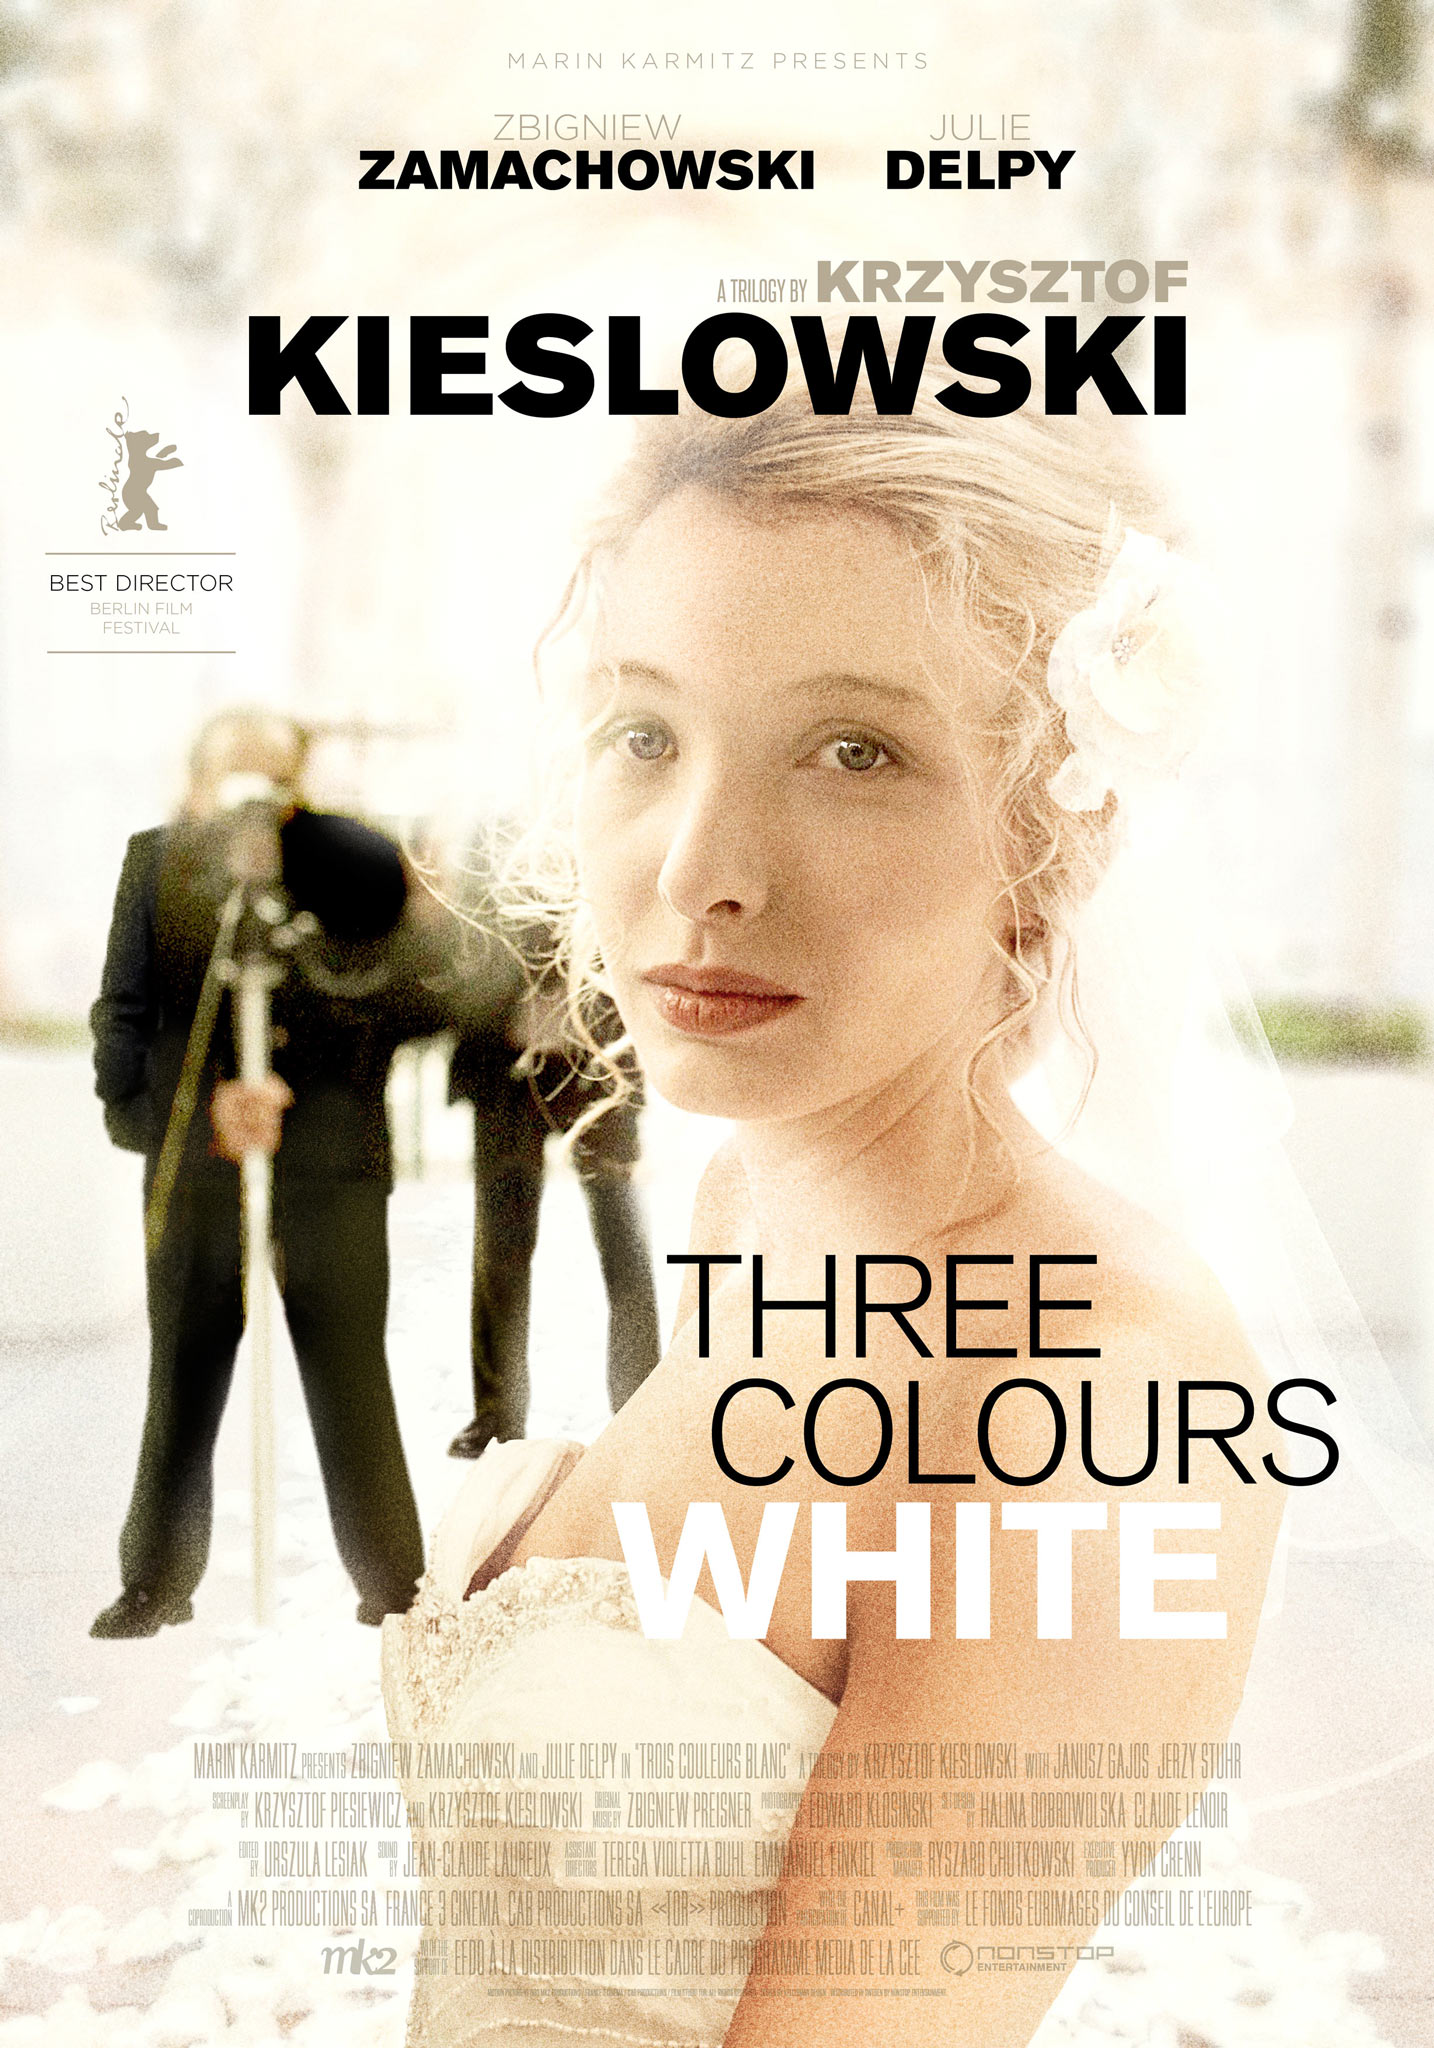 Three Colours White (1993) theatrical onesheet